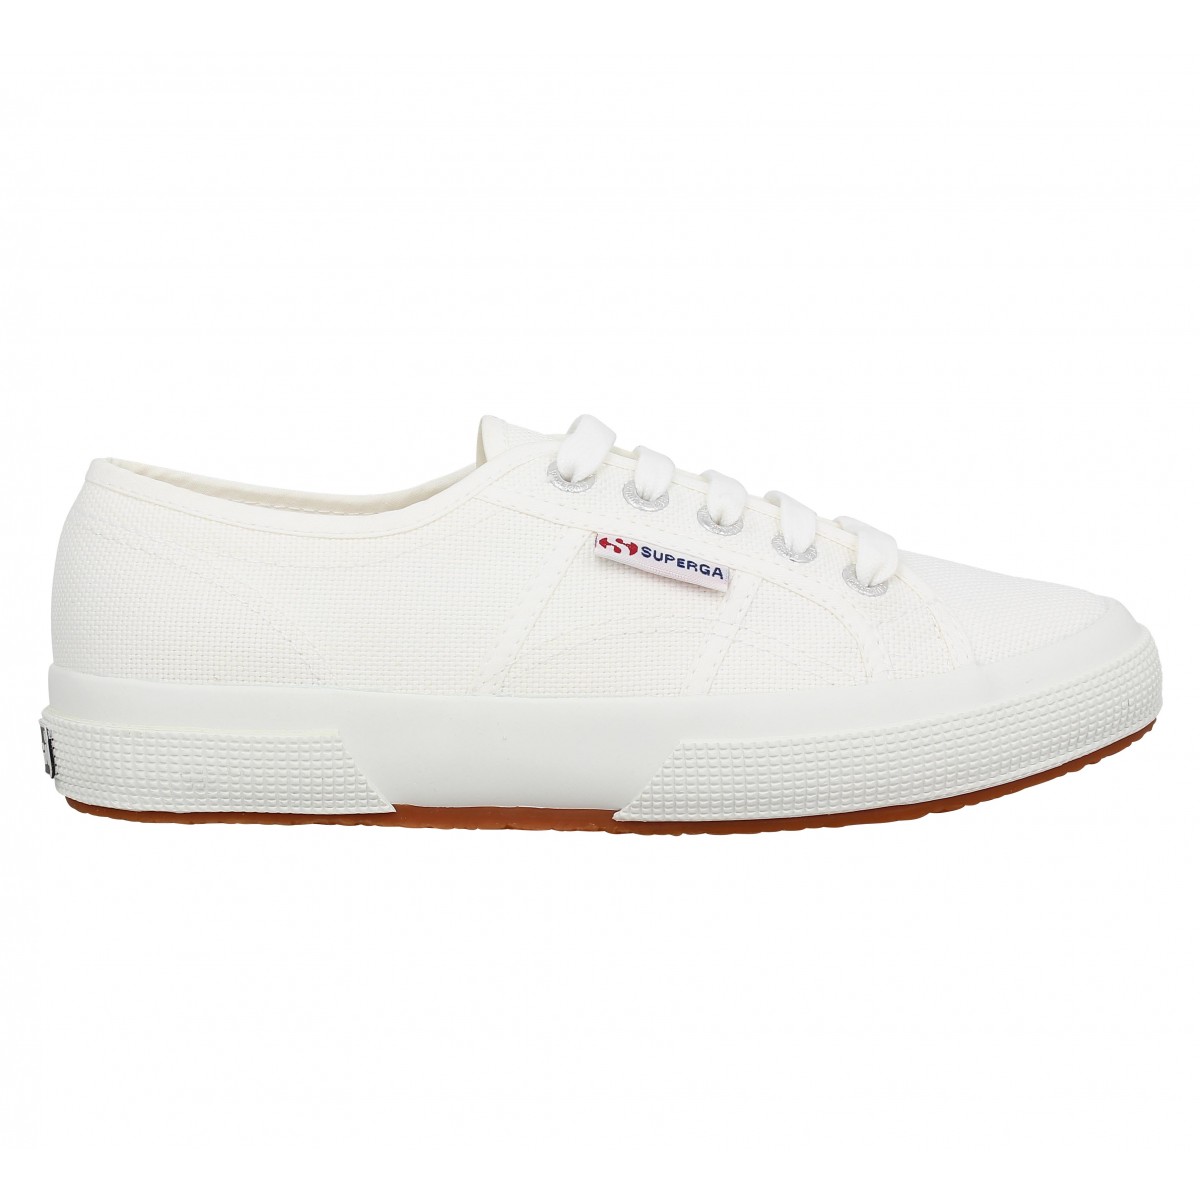 Superga 2750 Cotu Unisexe Chaussures Chaussure-Blanc Toutes Les Tailles